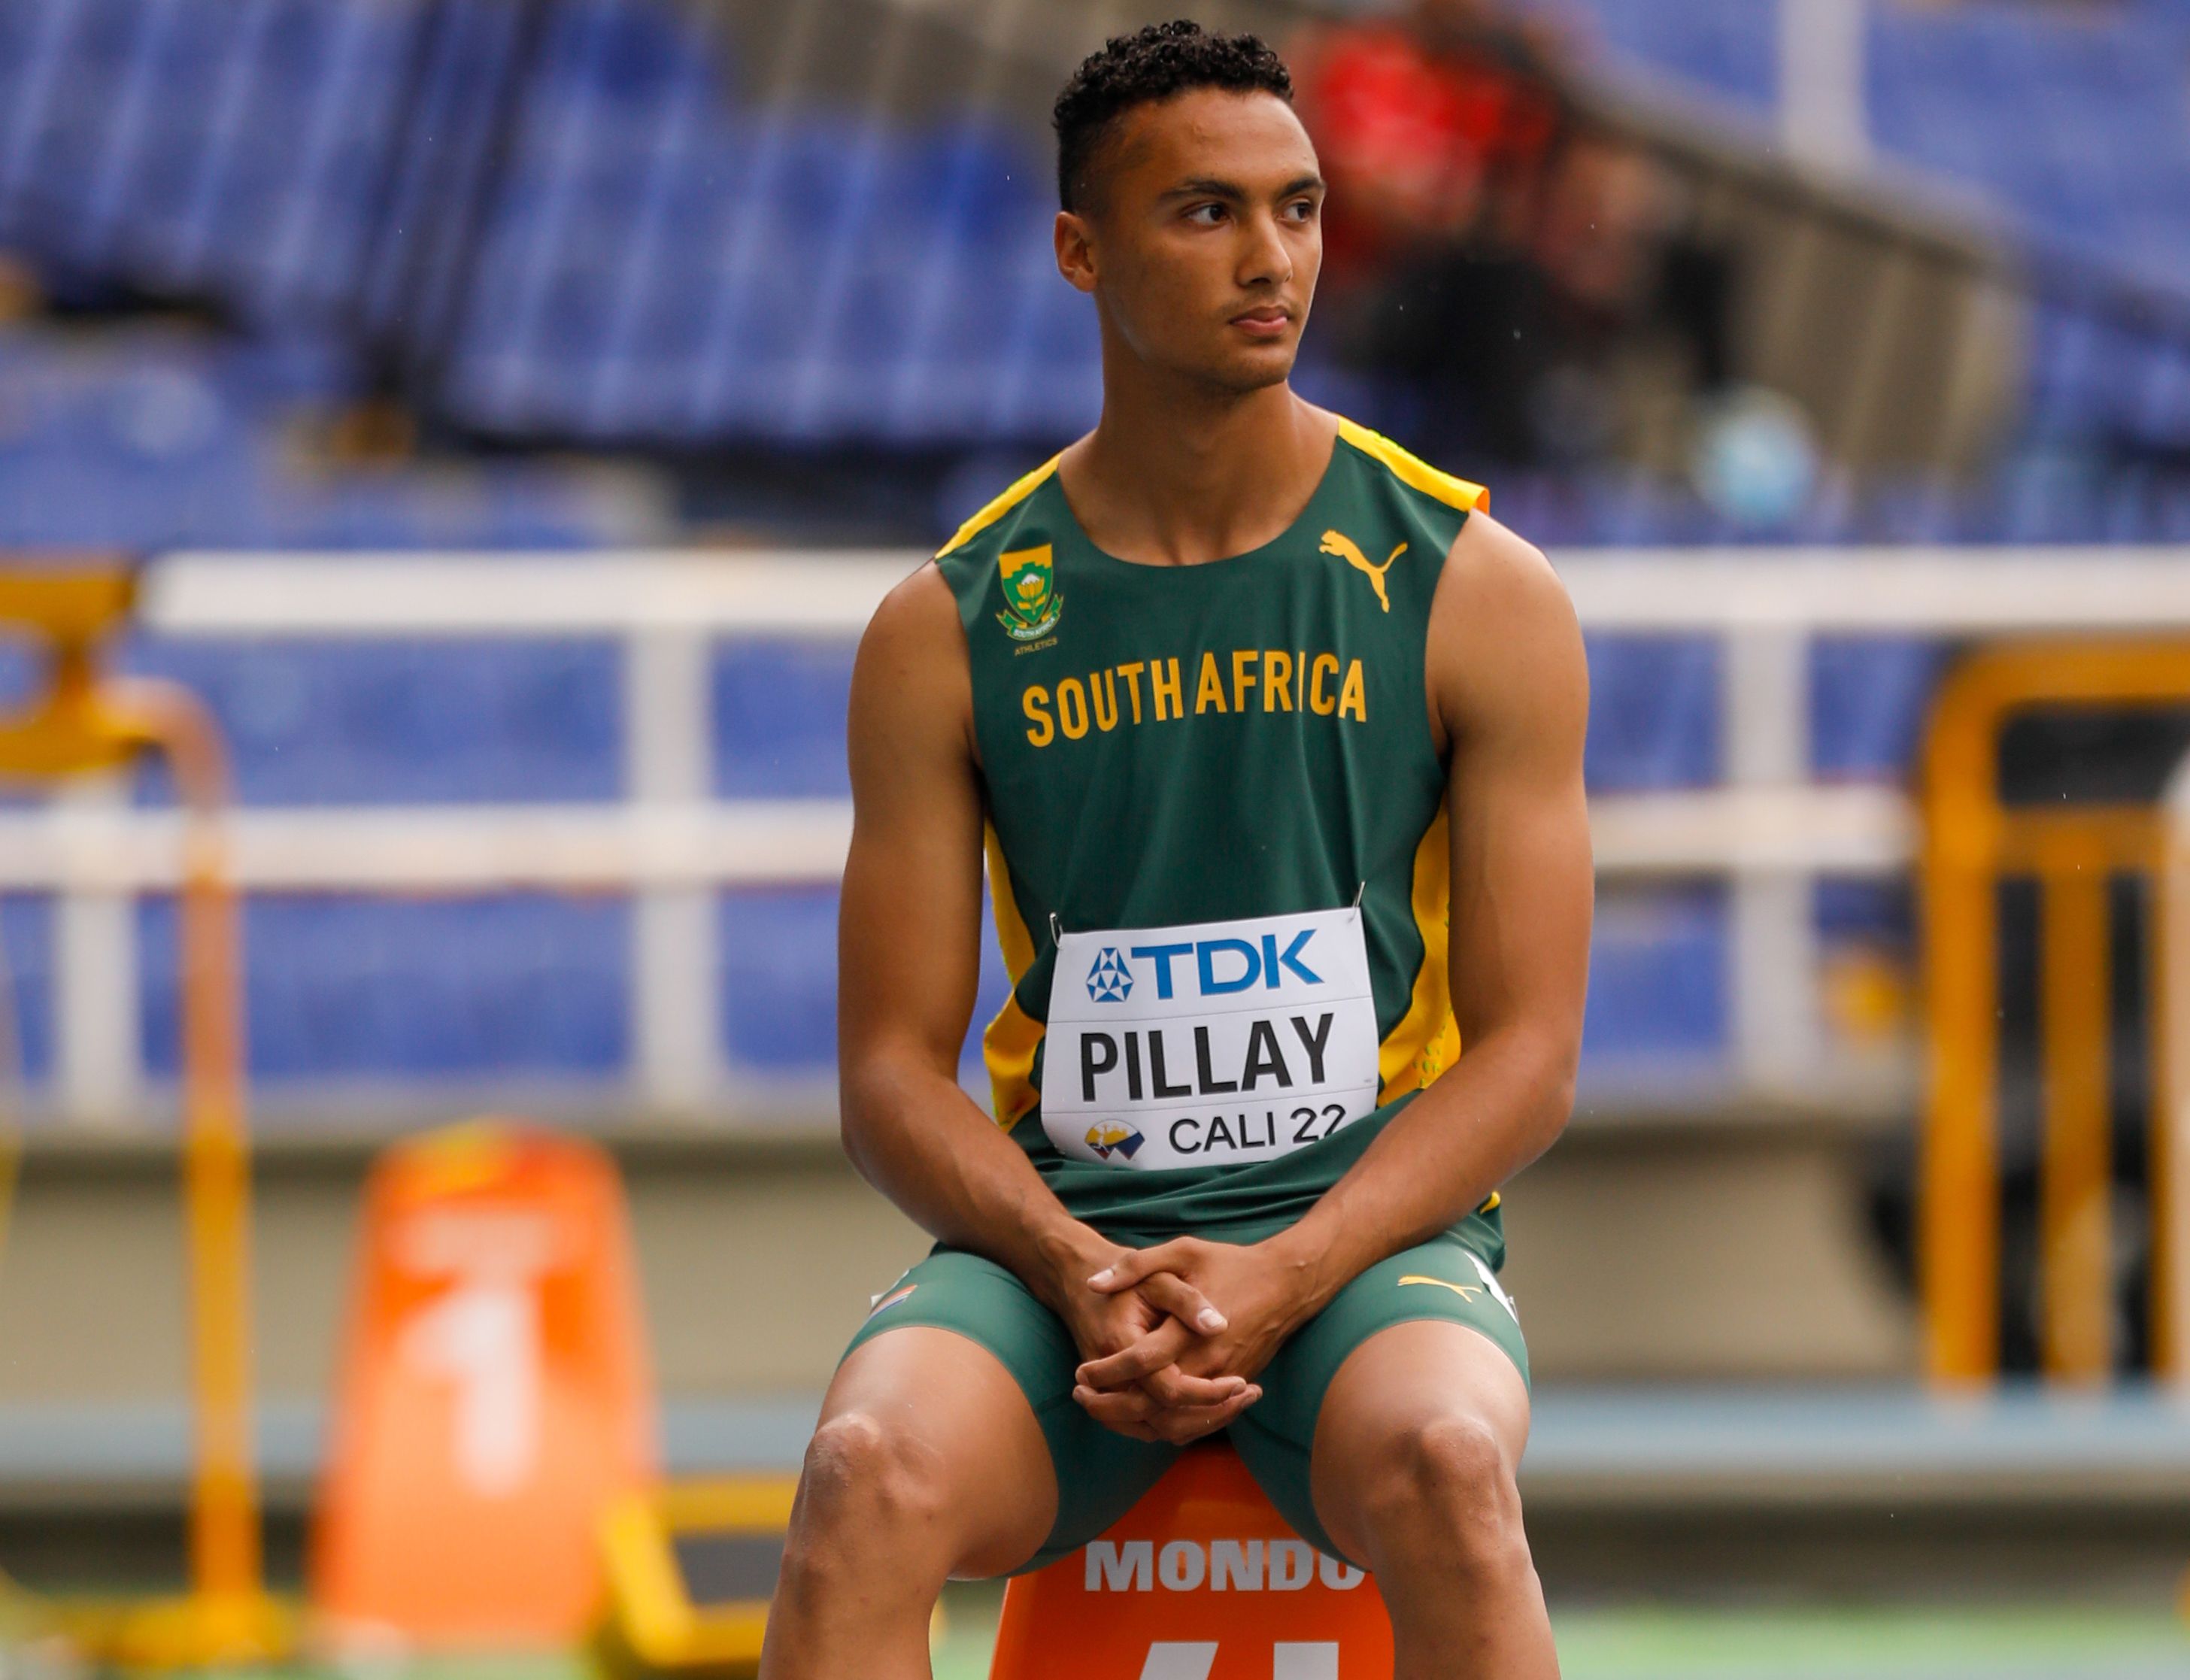 South Africa's Lythe Pillay at the World Athletics U20 Championships Cali 22